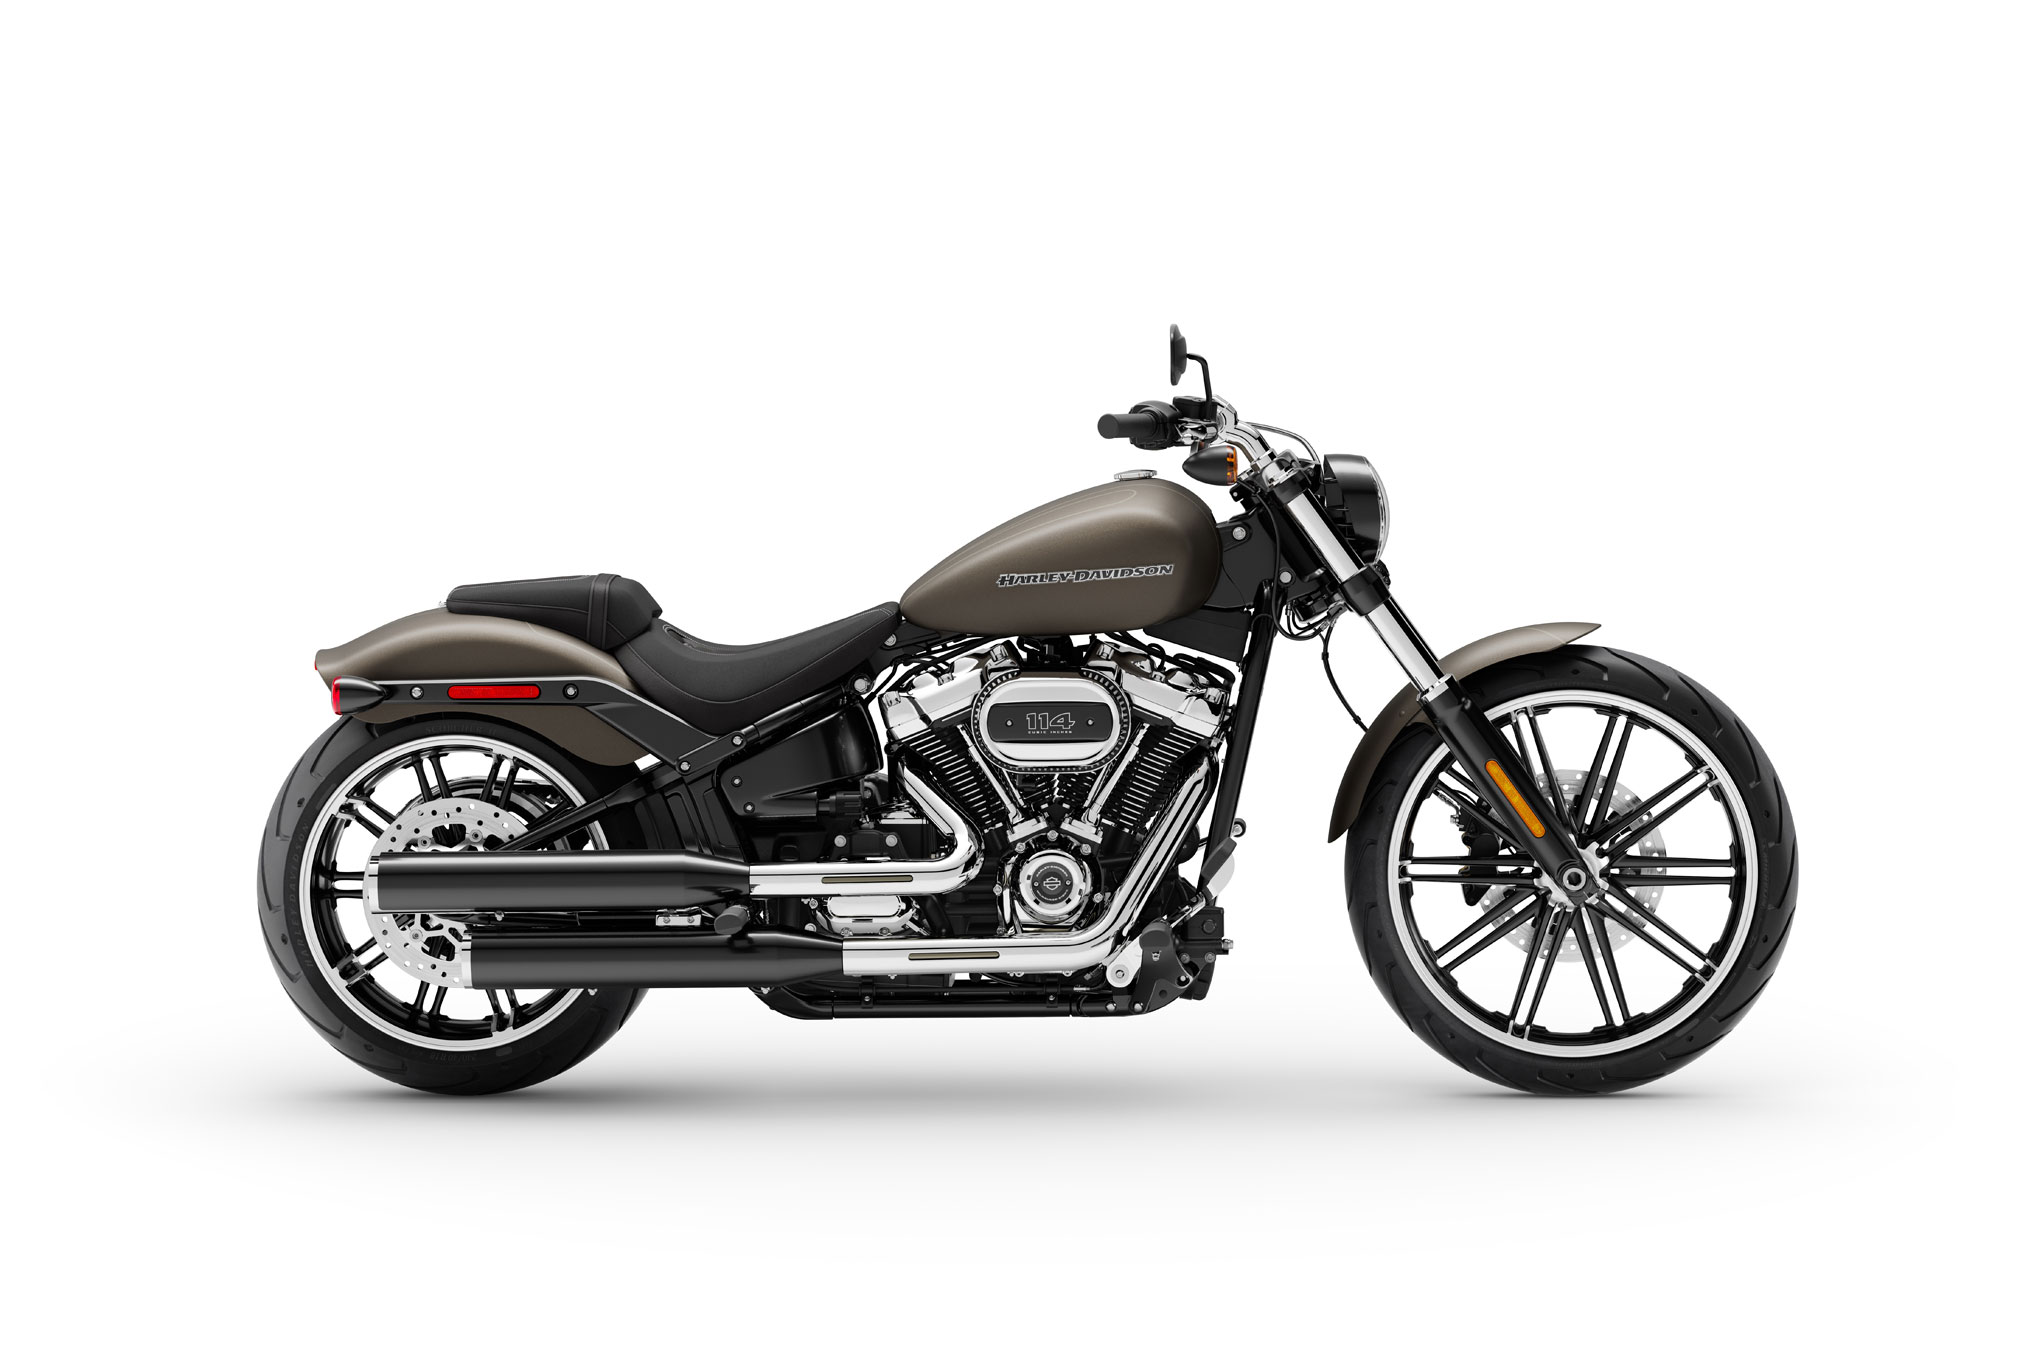 2020 HarleyDavidson Breakout 114 Guide • Total Motorcycle